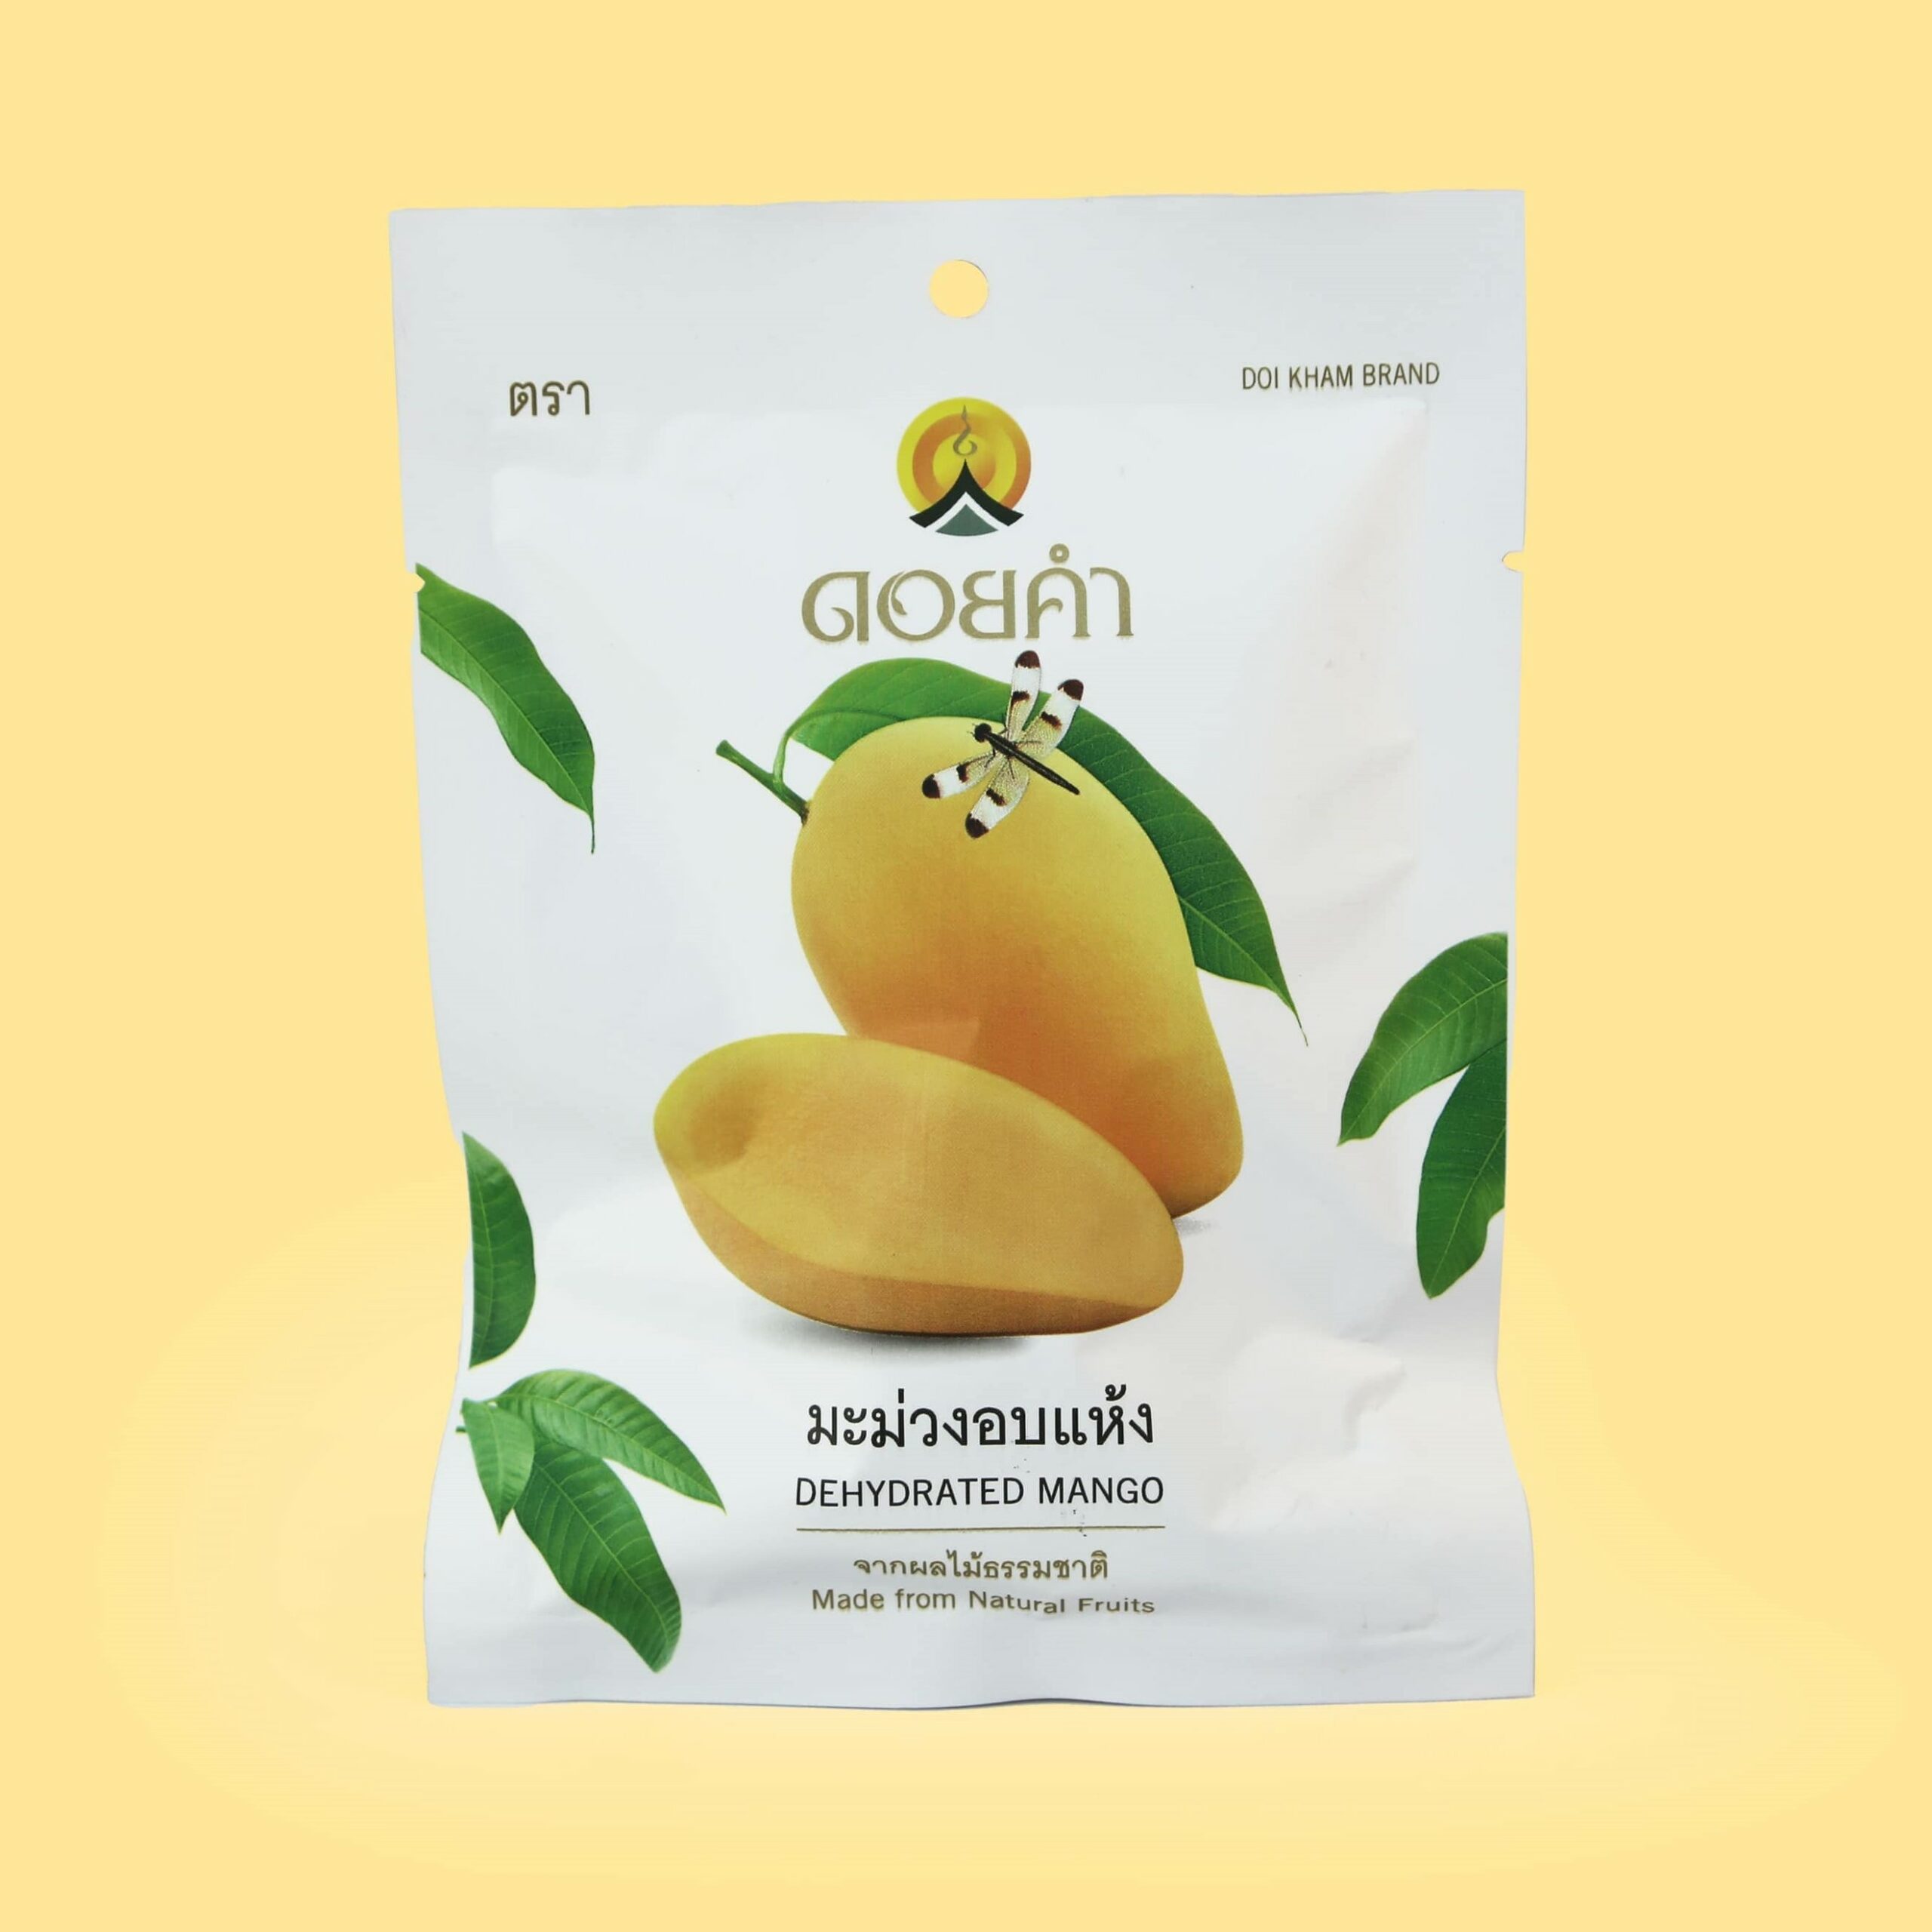 Doi Kham brand dehydrated mango made from selected Thai ripe mangoes